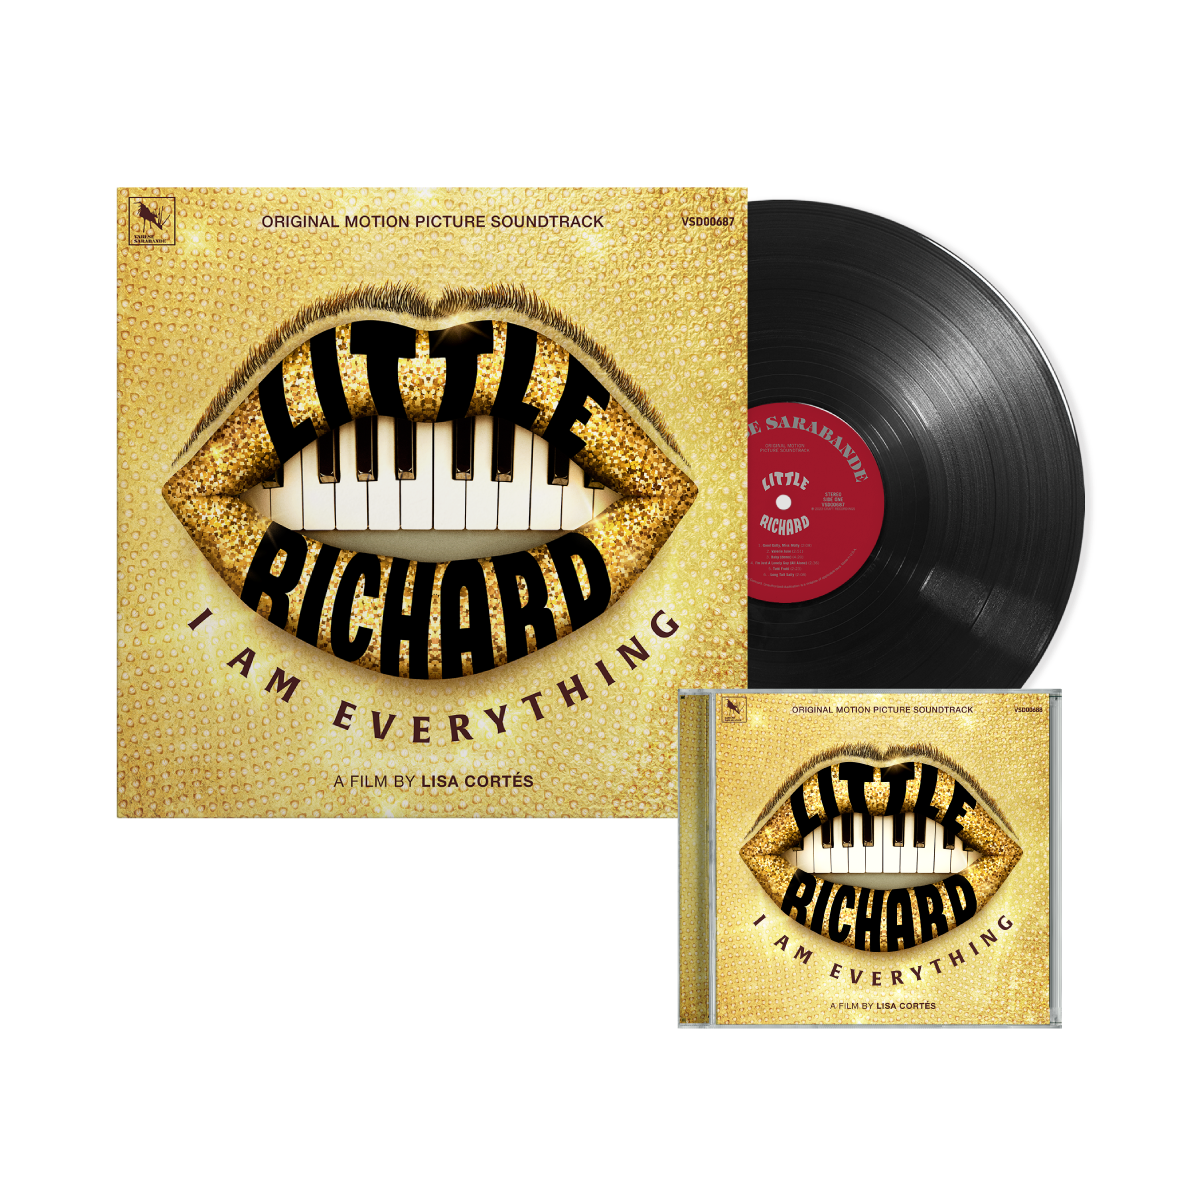 Little Richard - I Am Everything (Original Motion Picture Soundtrack) - LP (Black) +  I Am Everything (Original Motion Picture Soundtrack) - CD